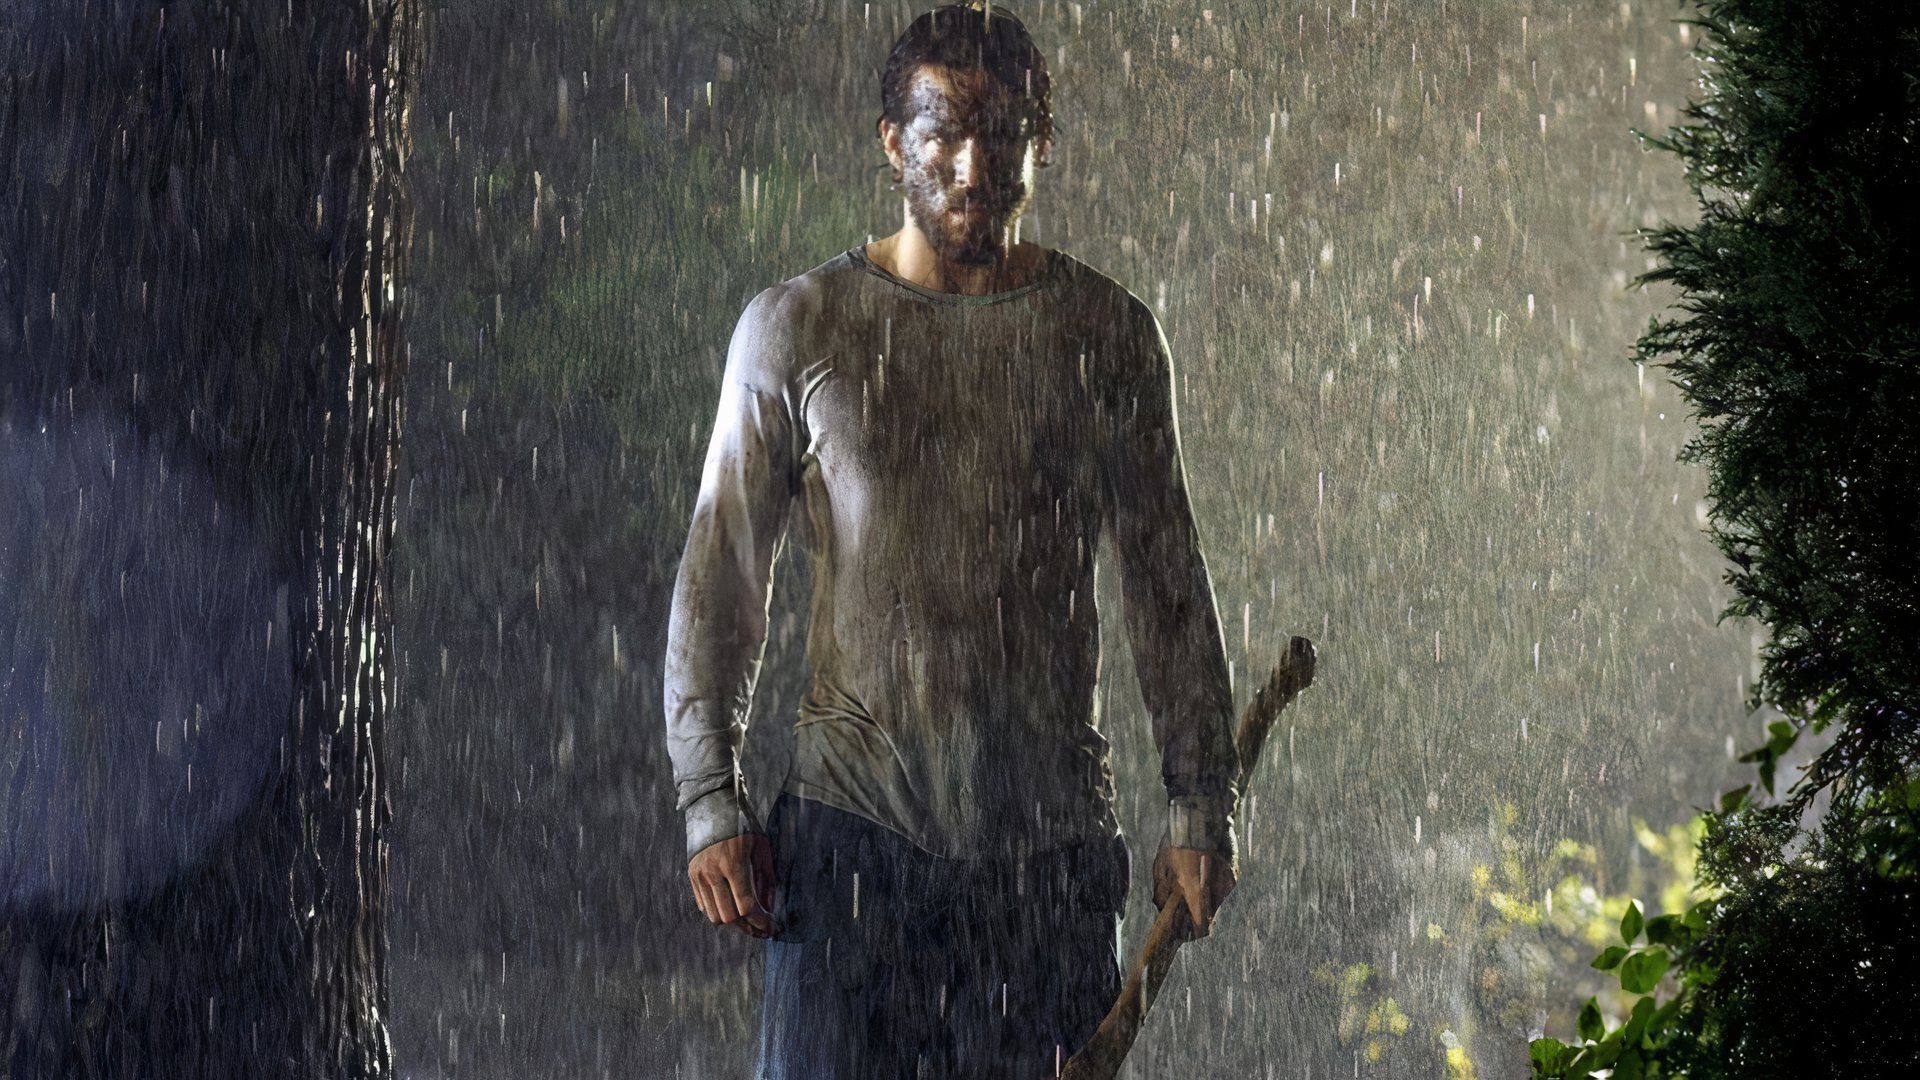 Ryan Reynolds in the rain holding an axe in The Amityville Horror